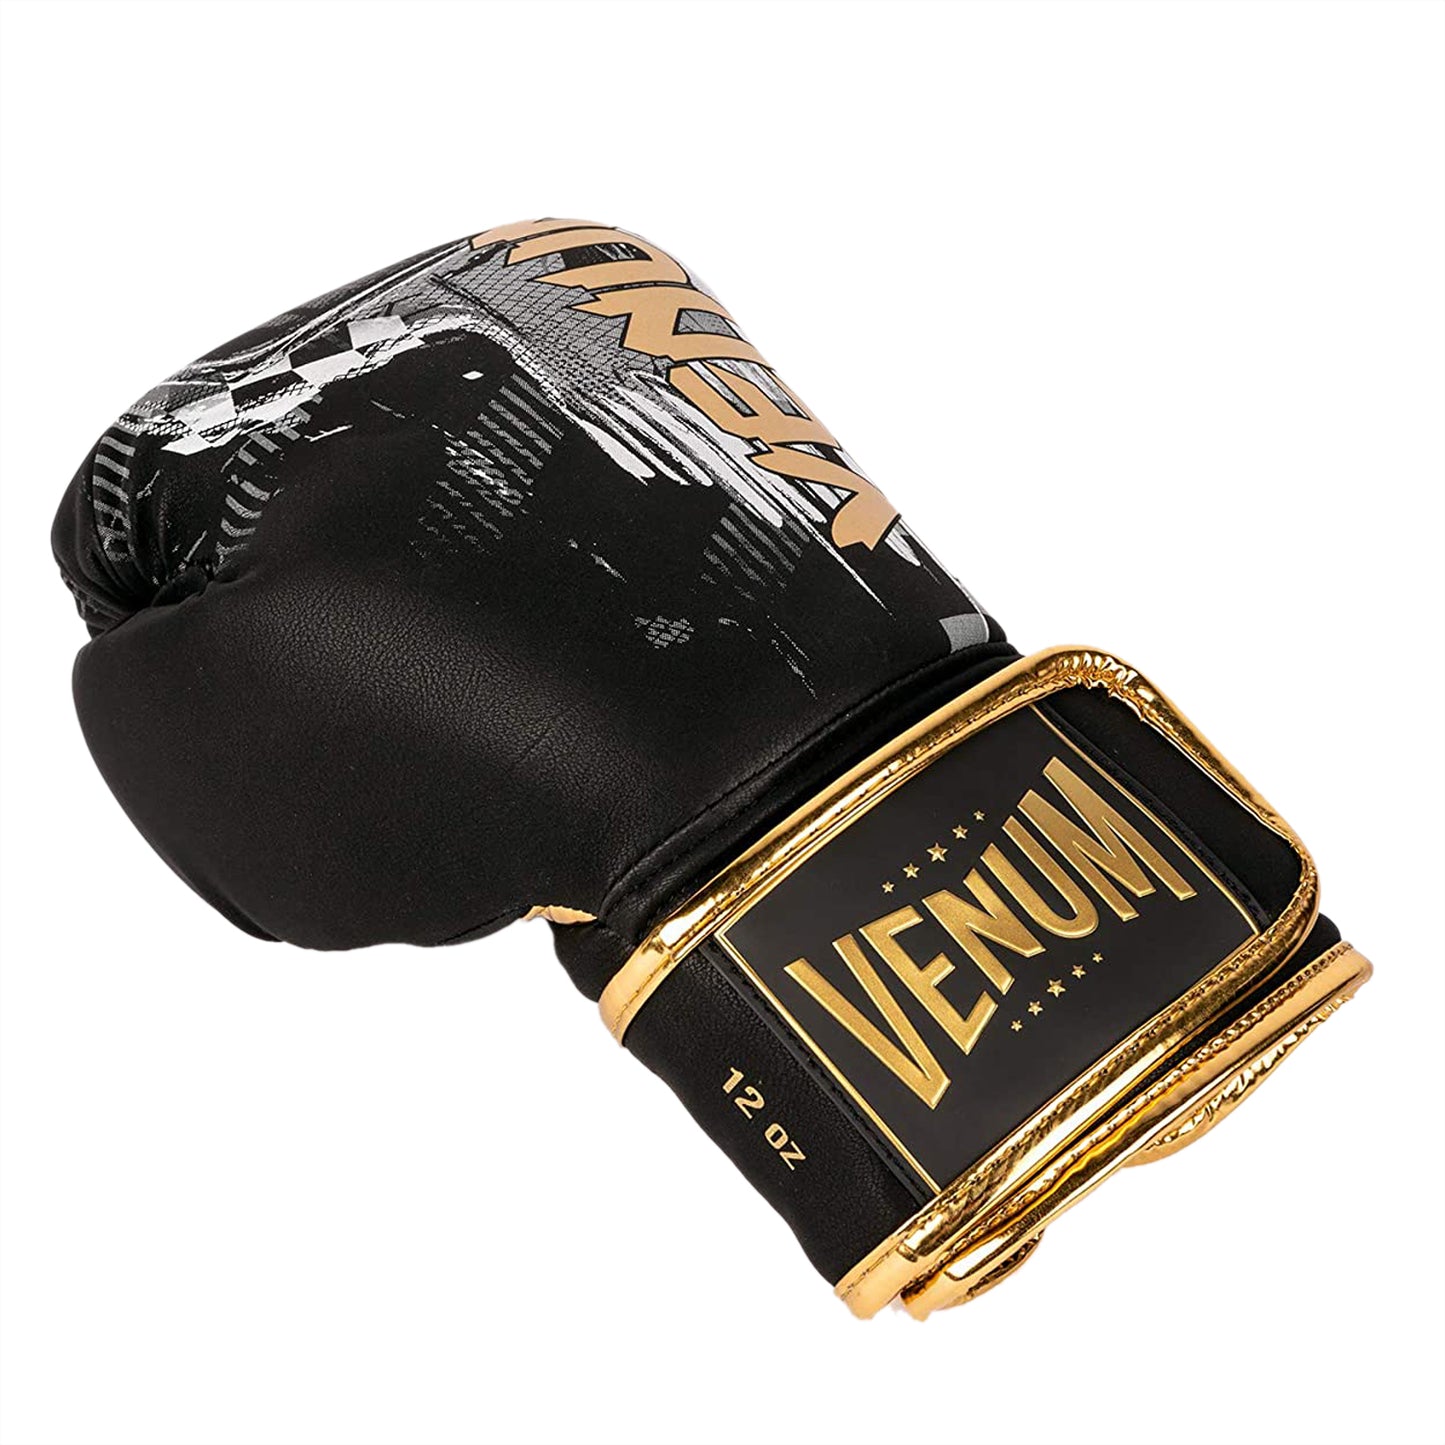 Venum Skull Boxing Gloves - Best Price online Prokicksports.com